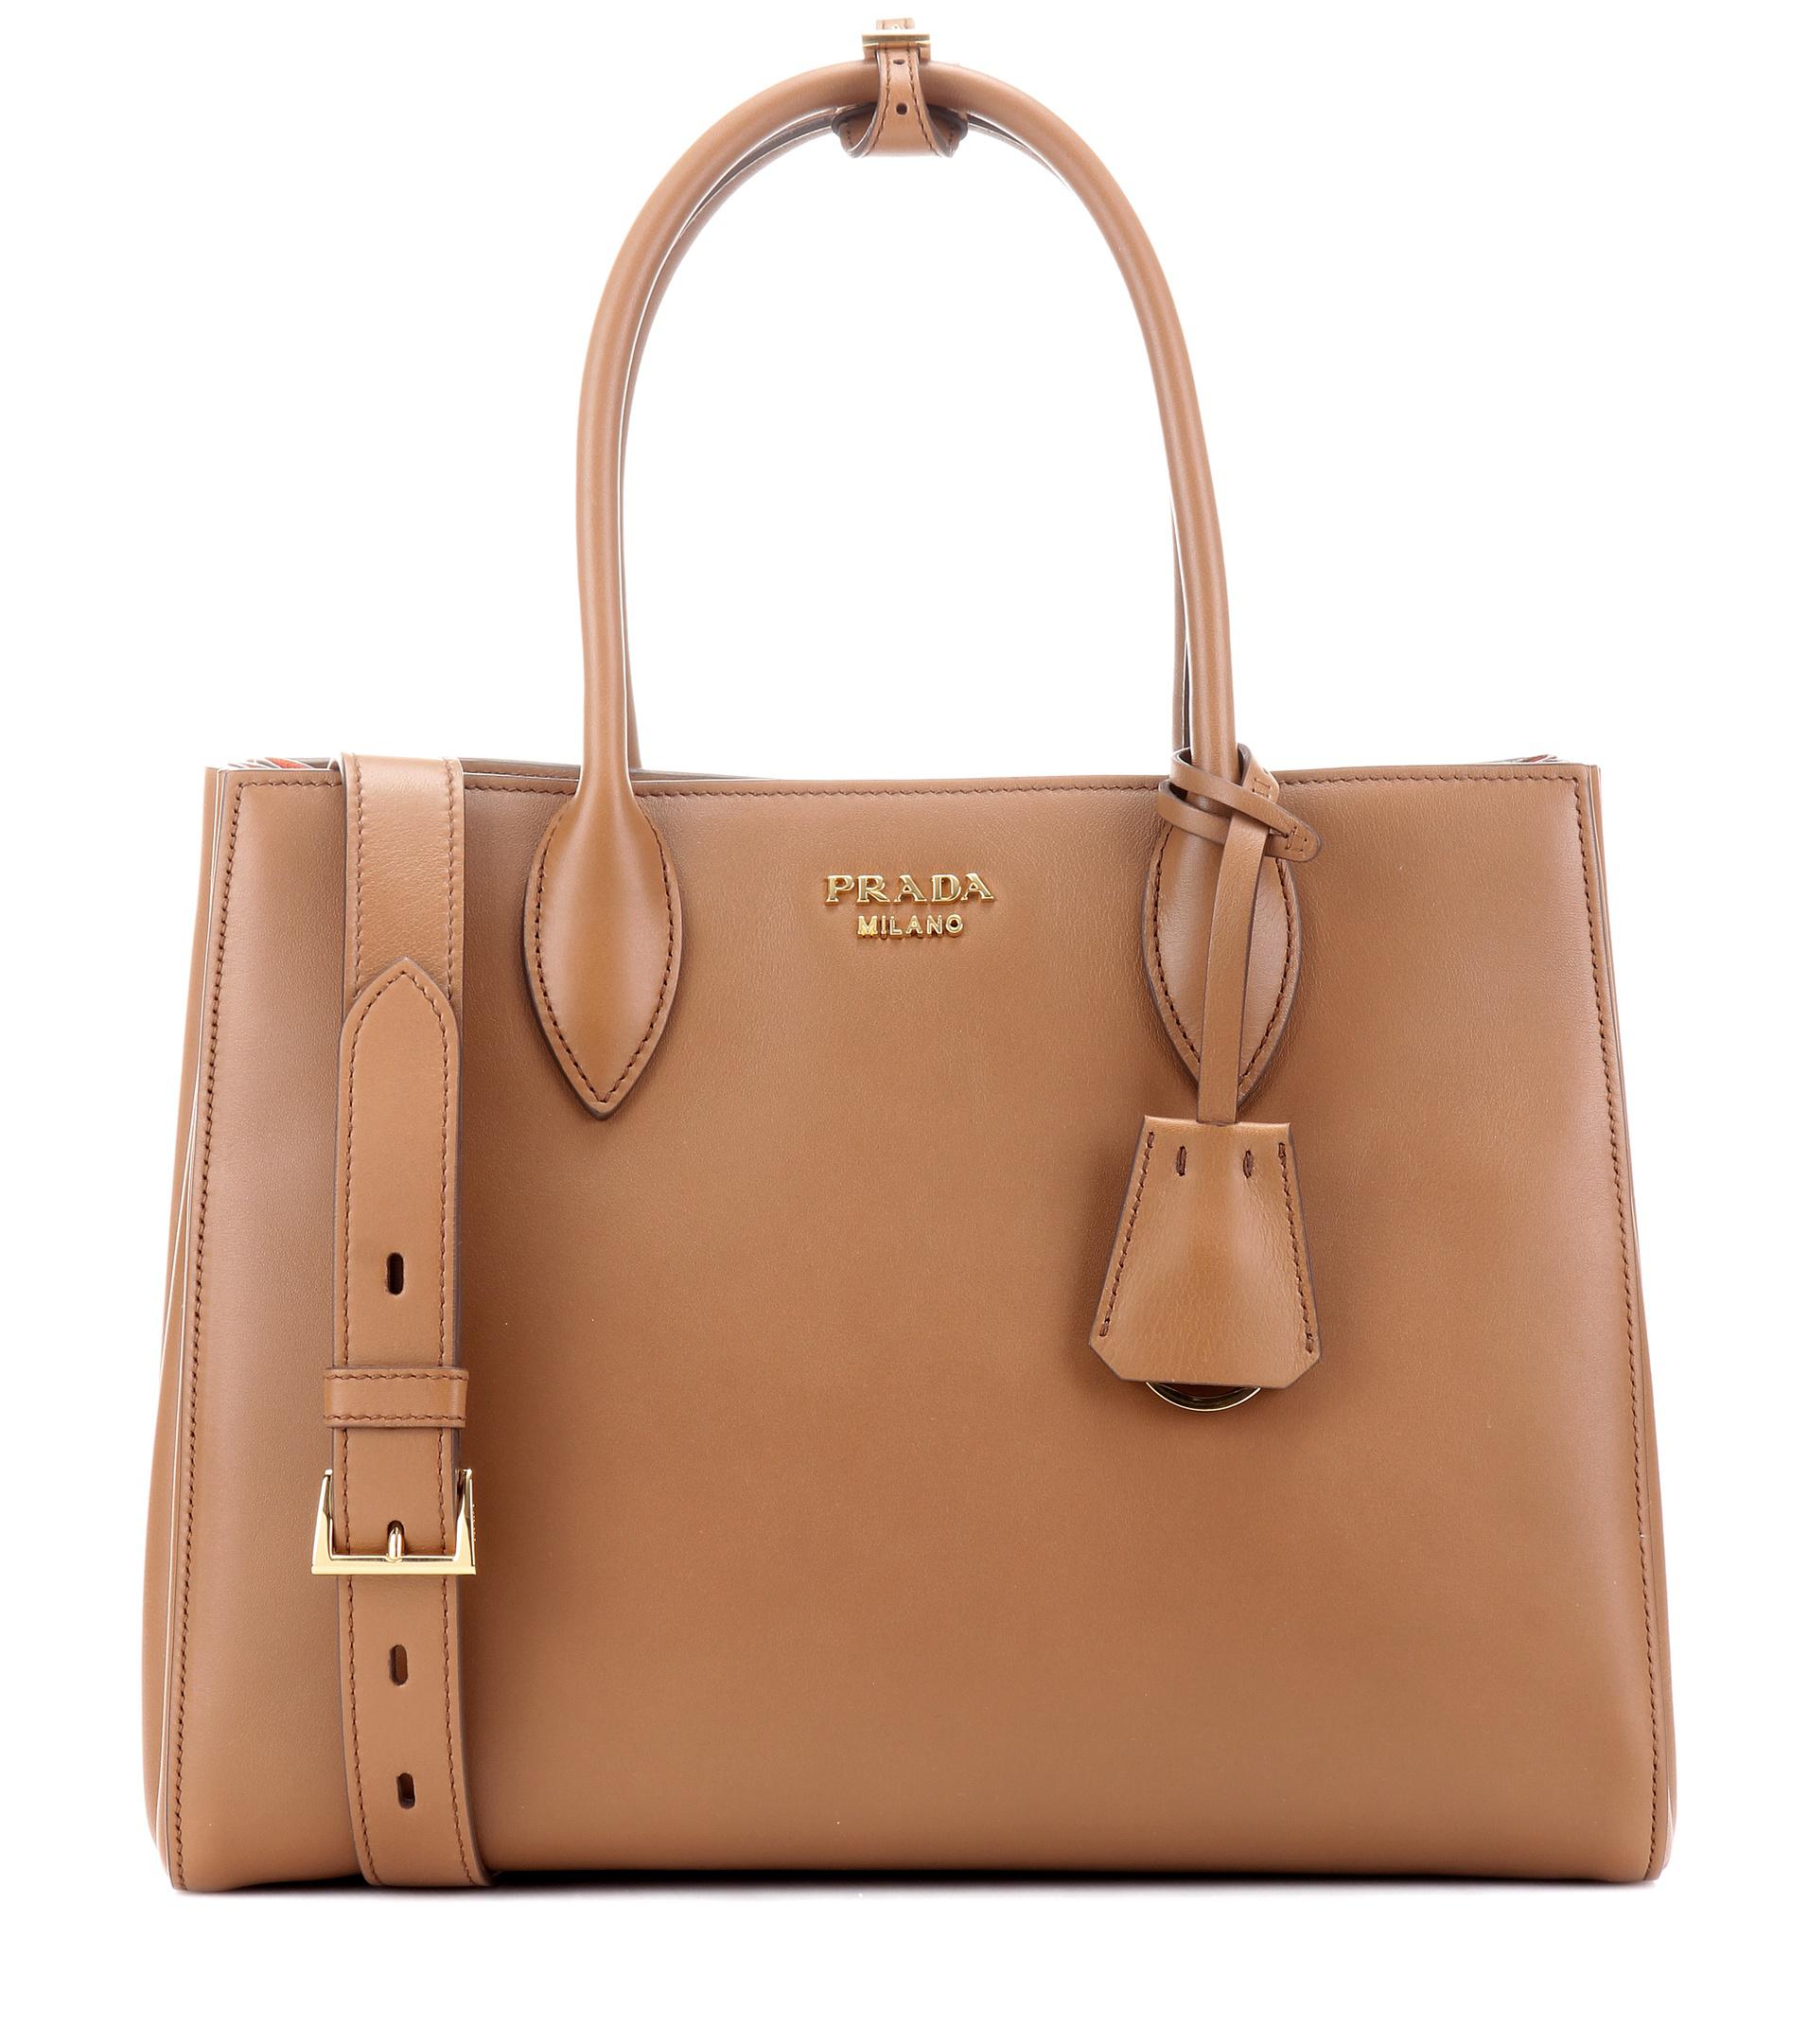 Lyst - Prada Bibliothek Soft Bag Small Leather Handbag in Brown